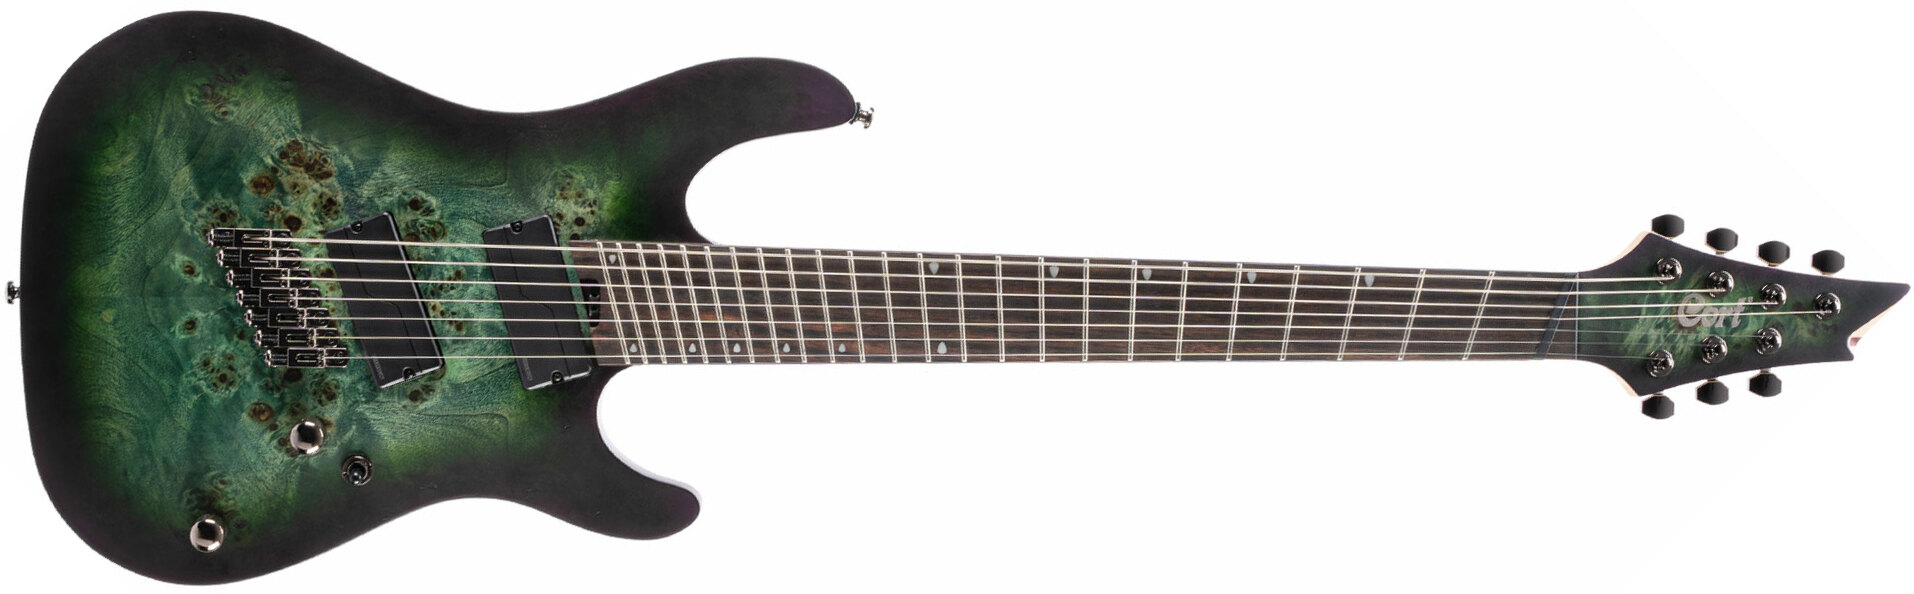 Cort Kx507 Multi Scale 7c Hh Fishman Fluence Ht Eb - Star Dust Green - Guitarra eléctrica de 7 cuerdas - Main picture